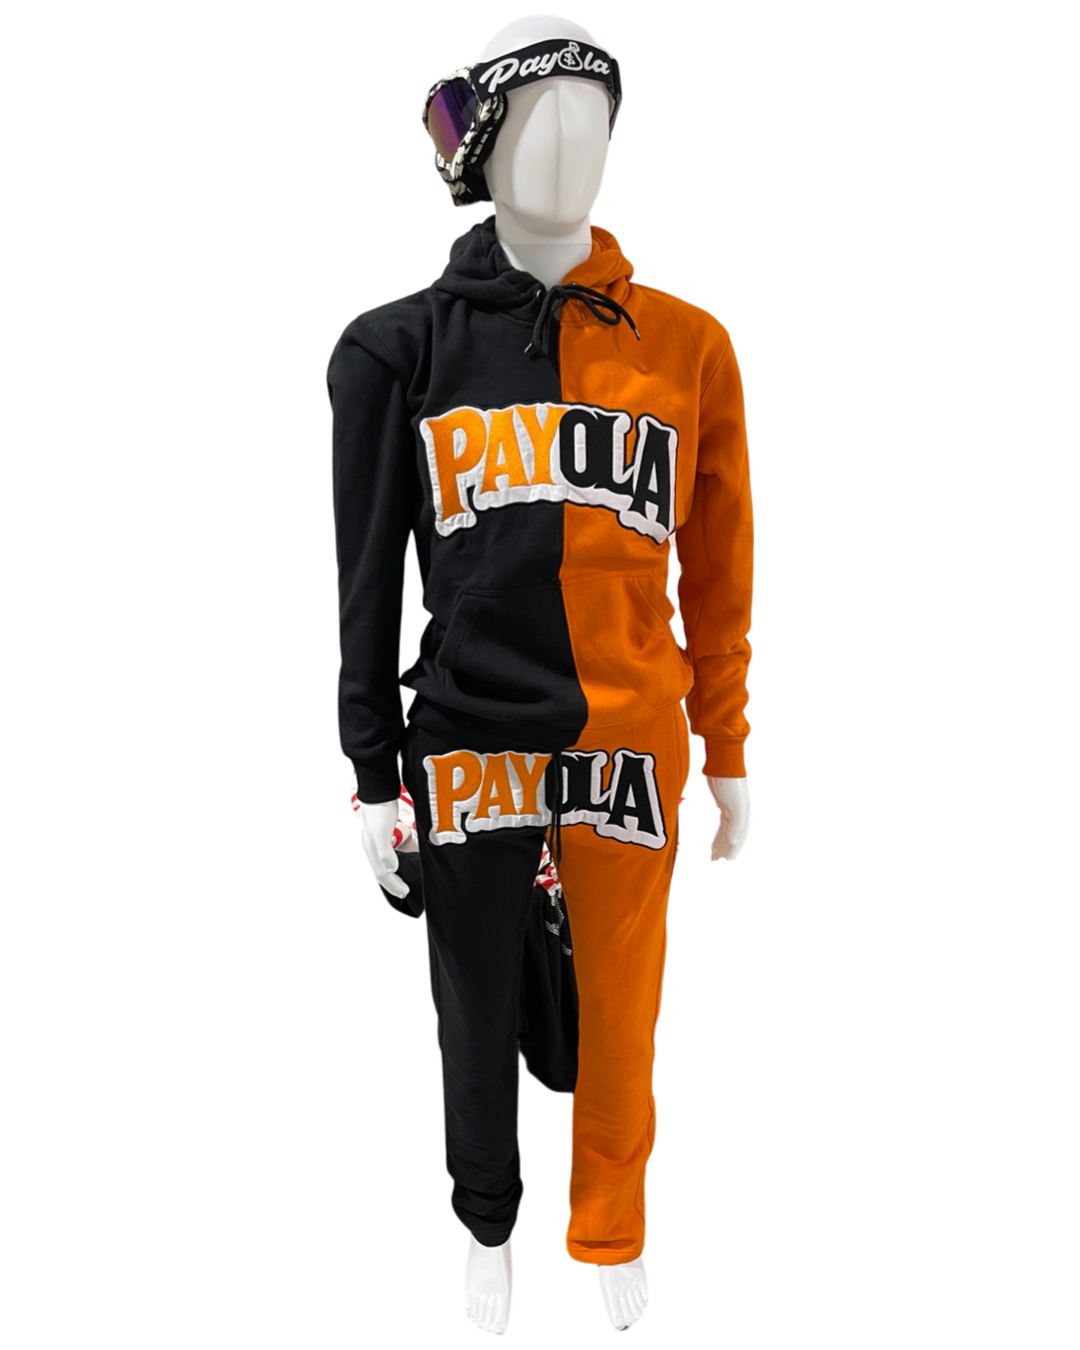 Payola Jumpsuits (Halloween Edition)